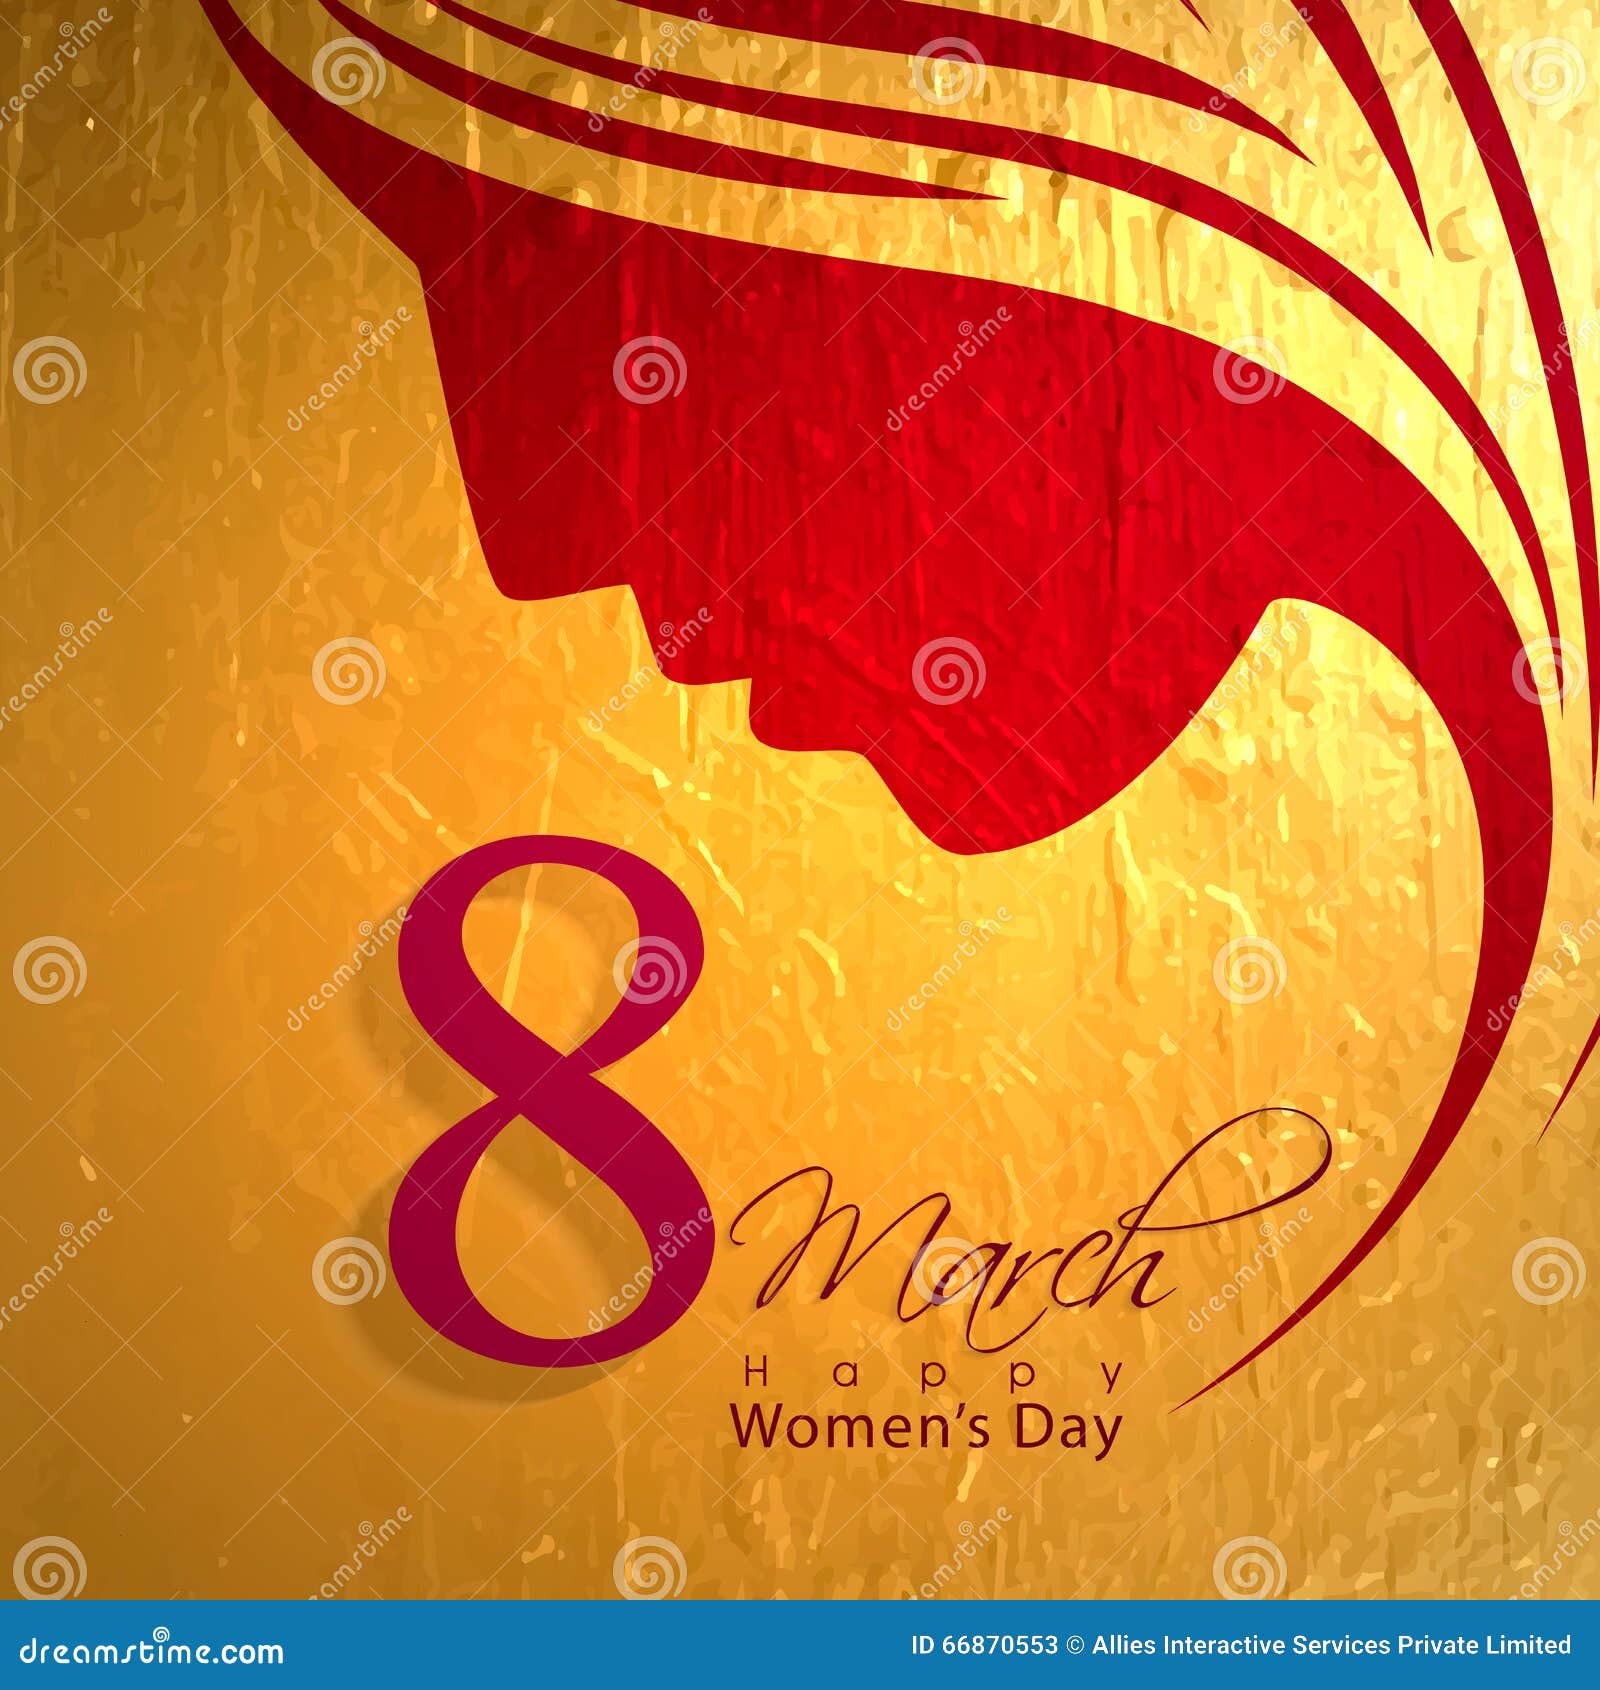 Greeting Card Design for Women S Day Celebration. Stock ...